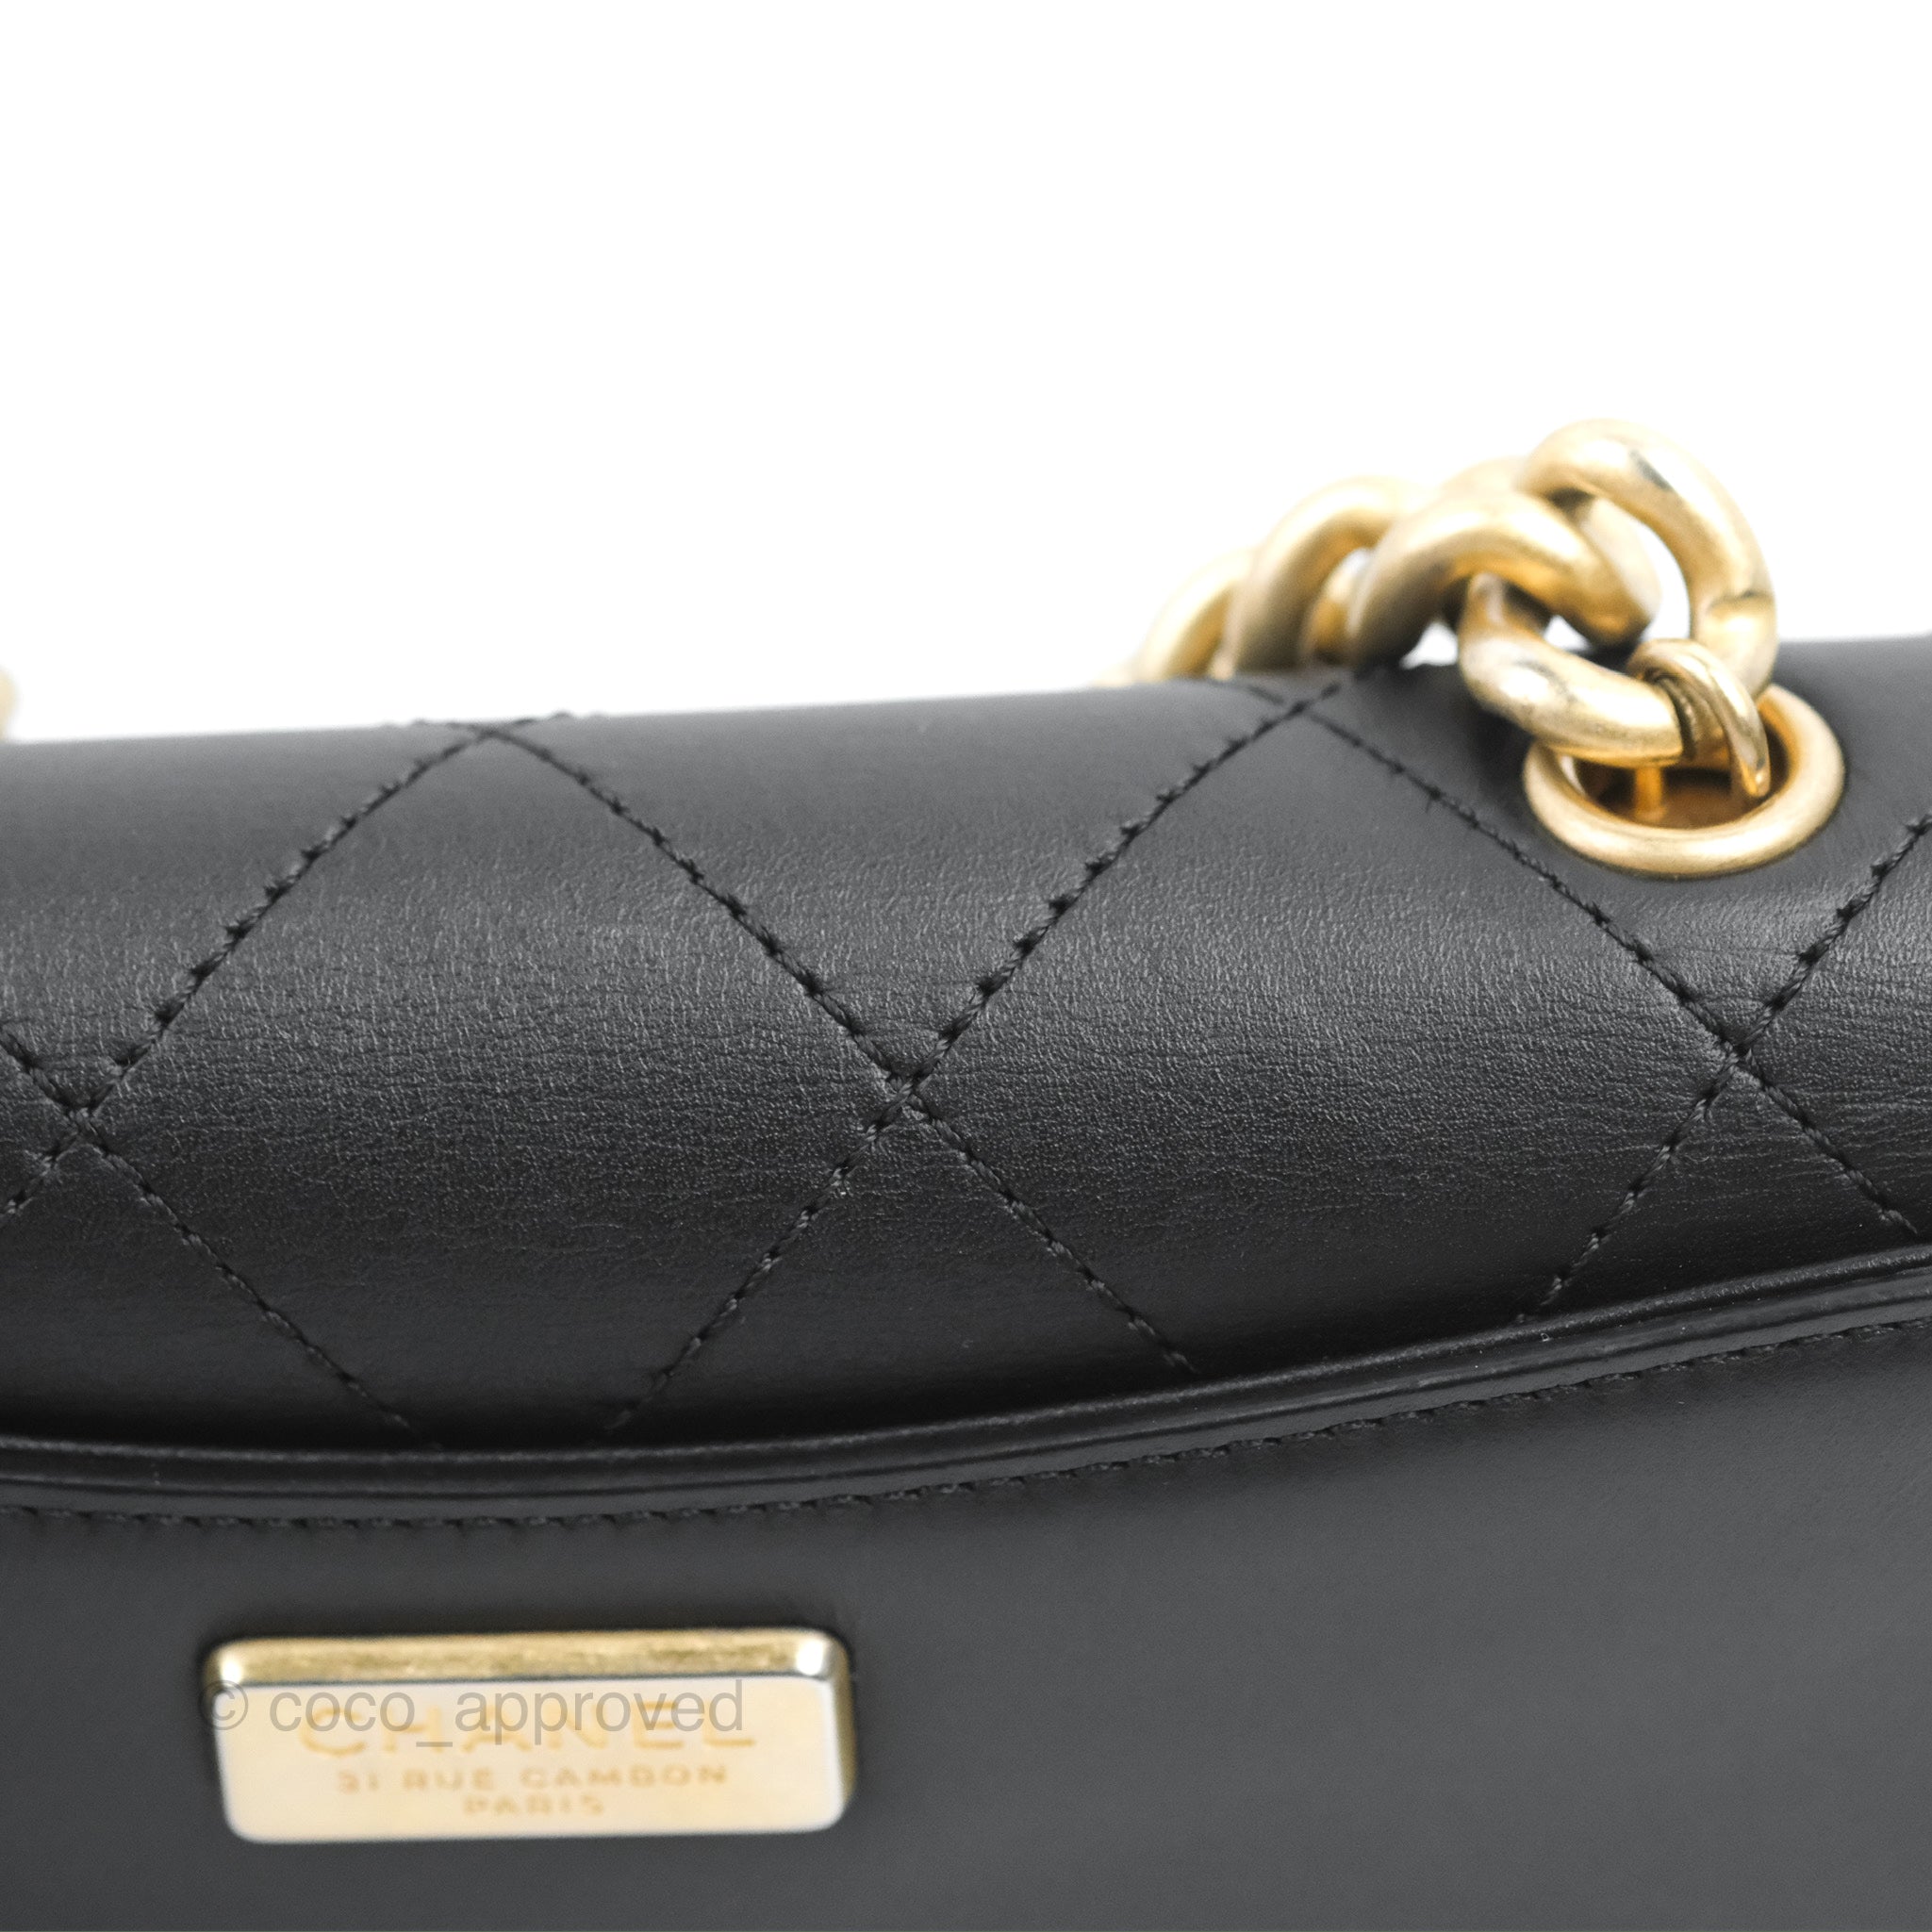 Chanel Black Quilted Calfskin Chain Handle Flap Bag Q6B1YF3PKB000